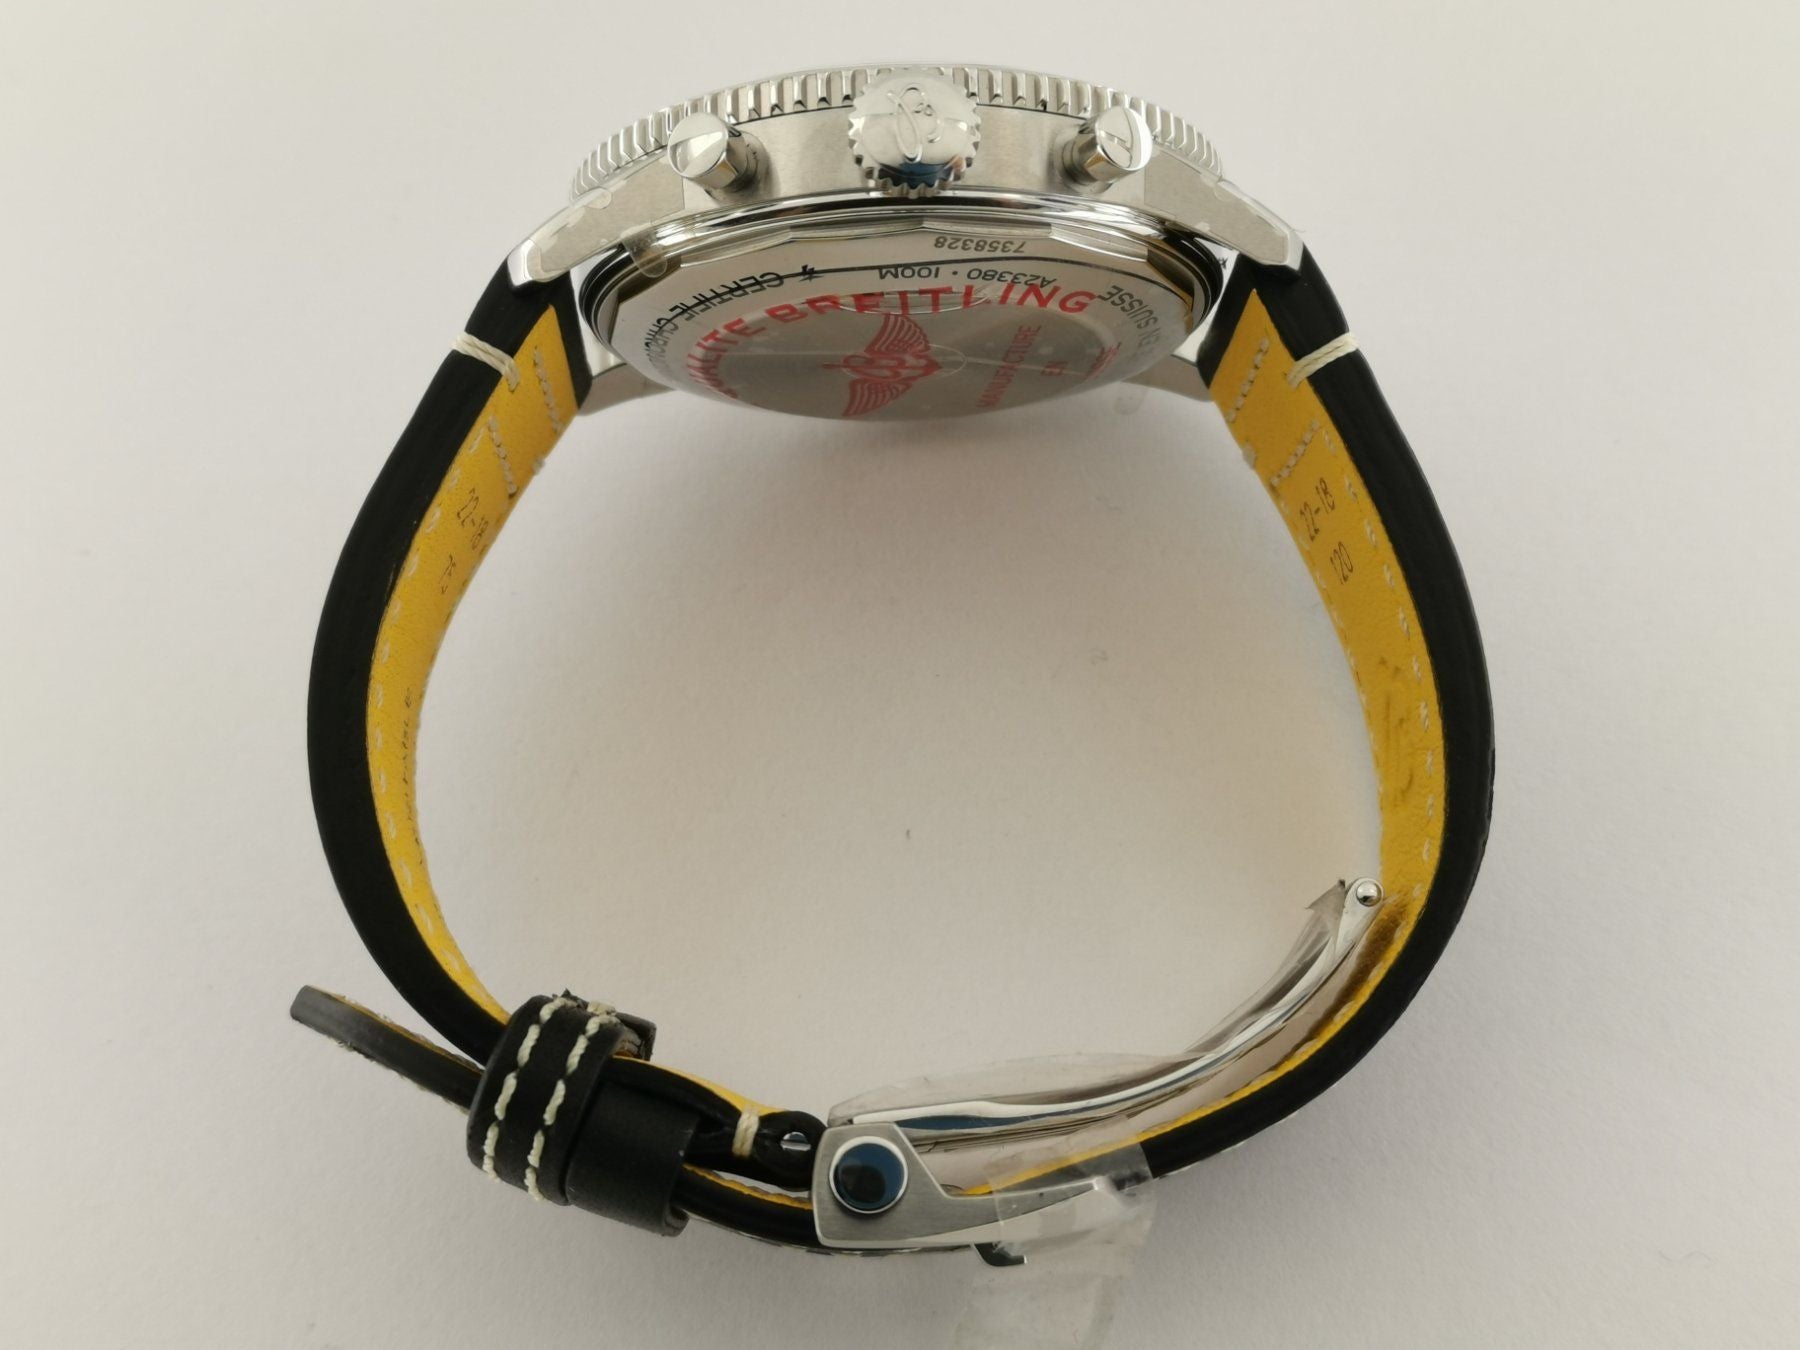 Breitling Classic Avi Chronograph 42